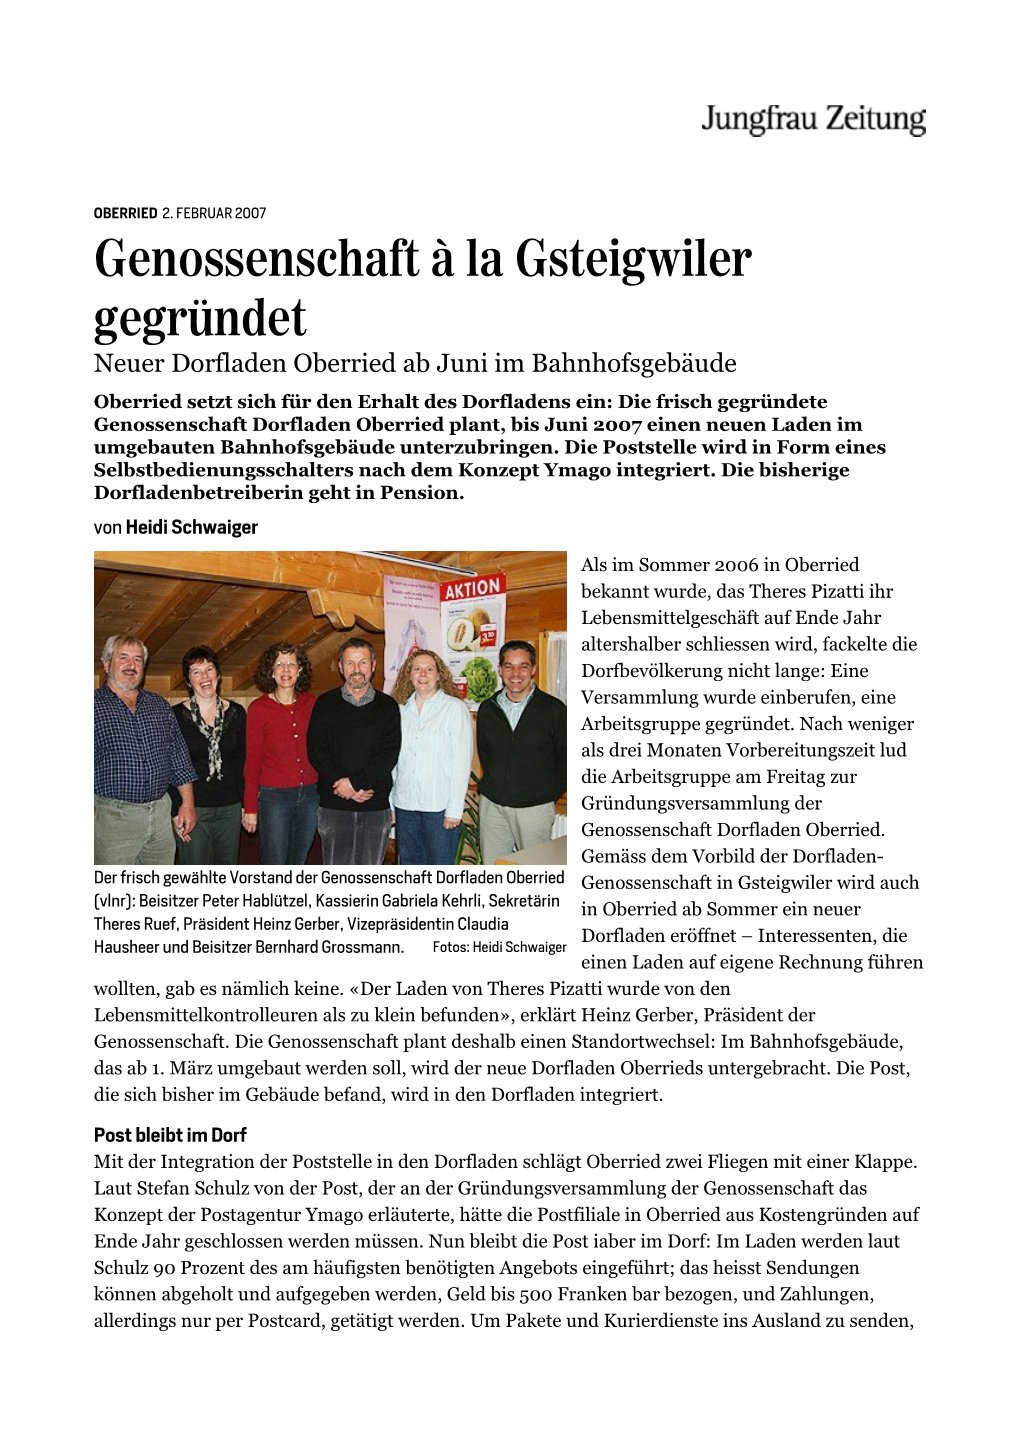 (Jungfrau Zeitung